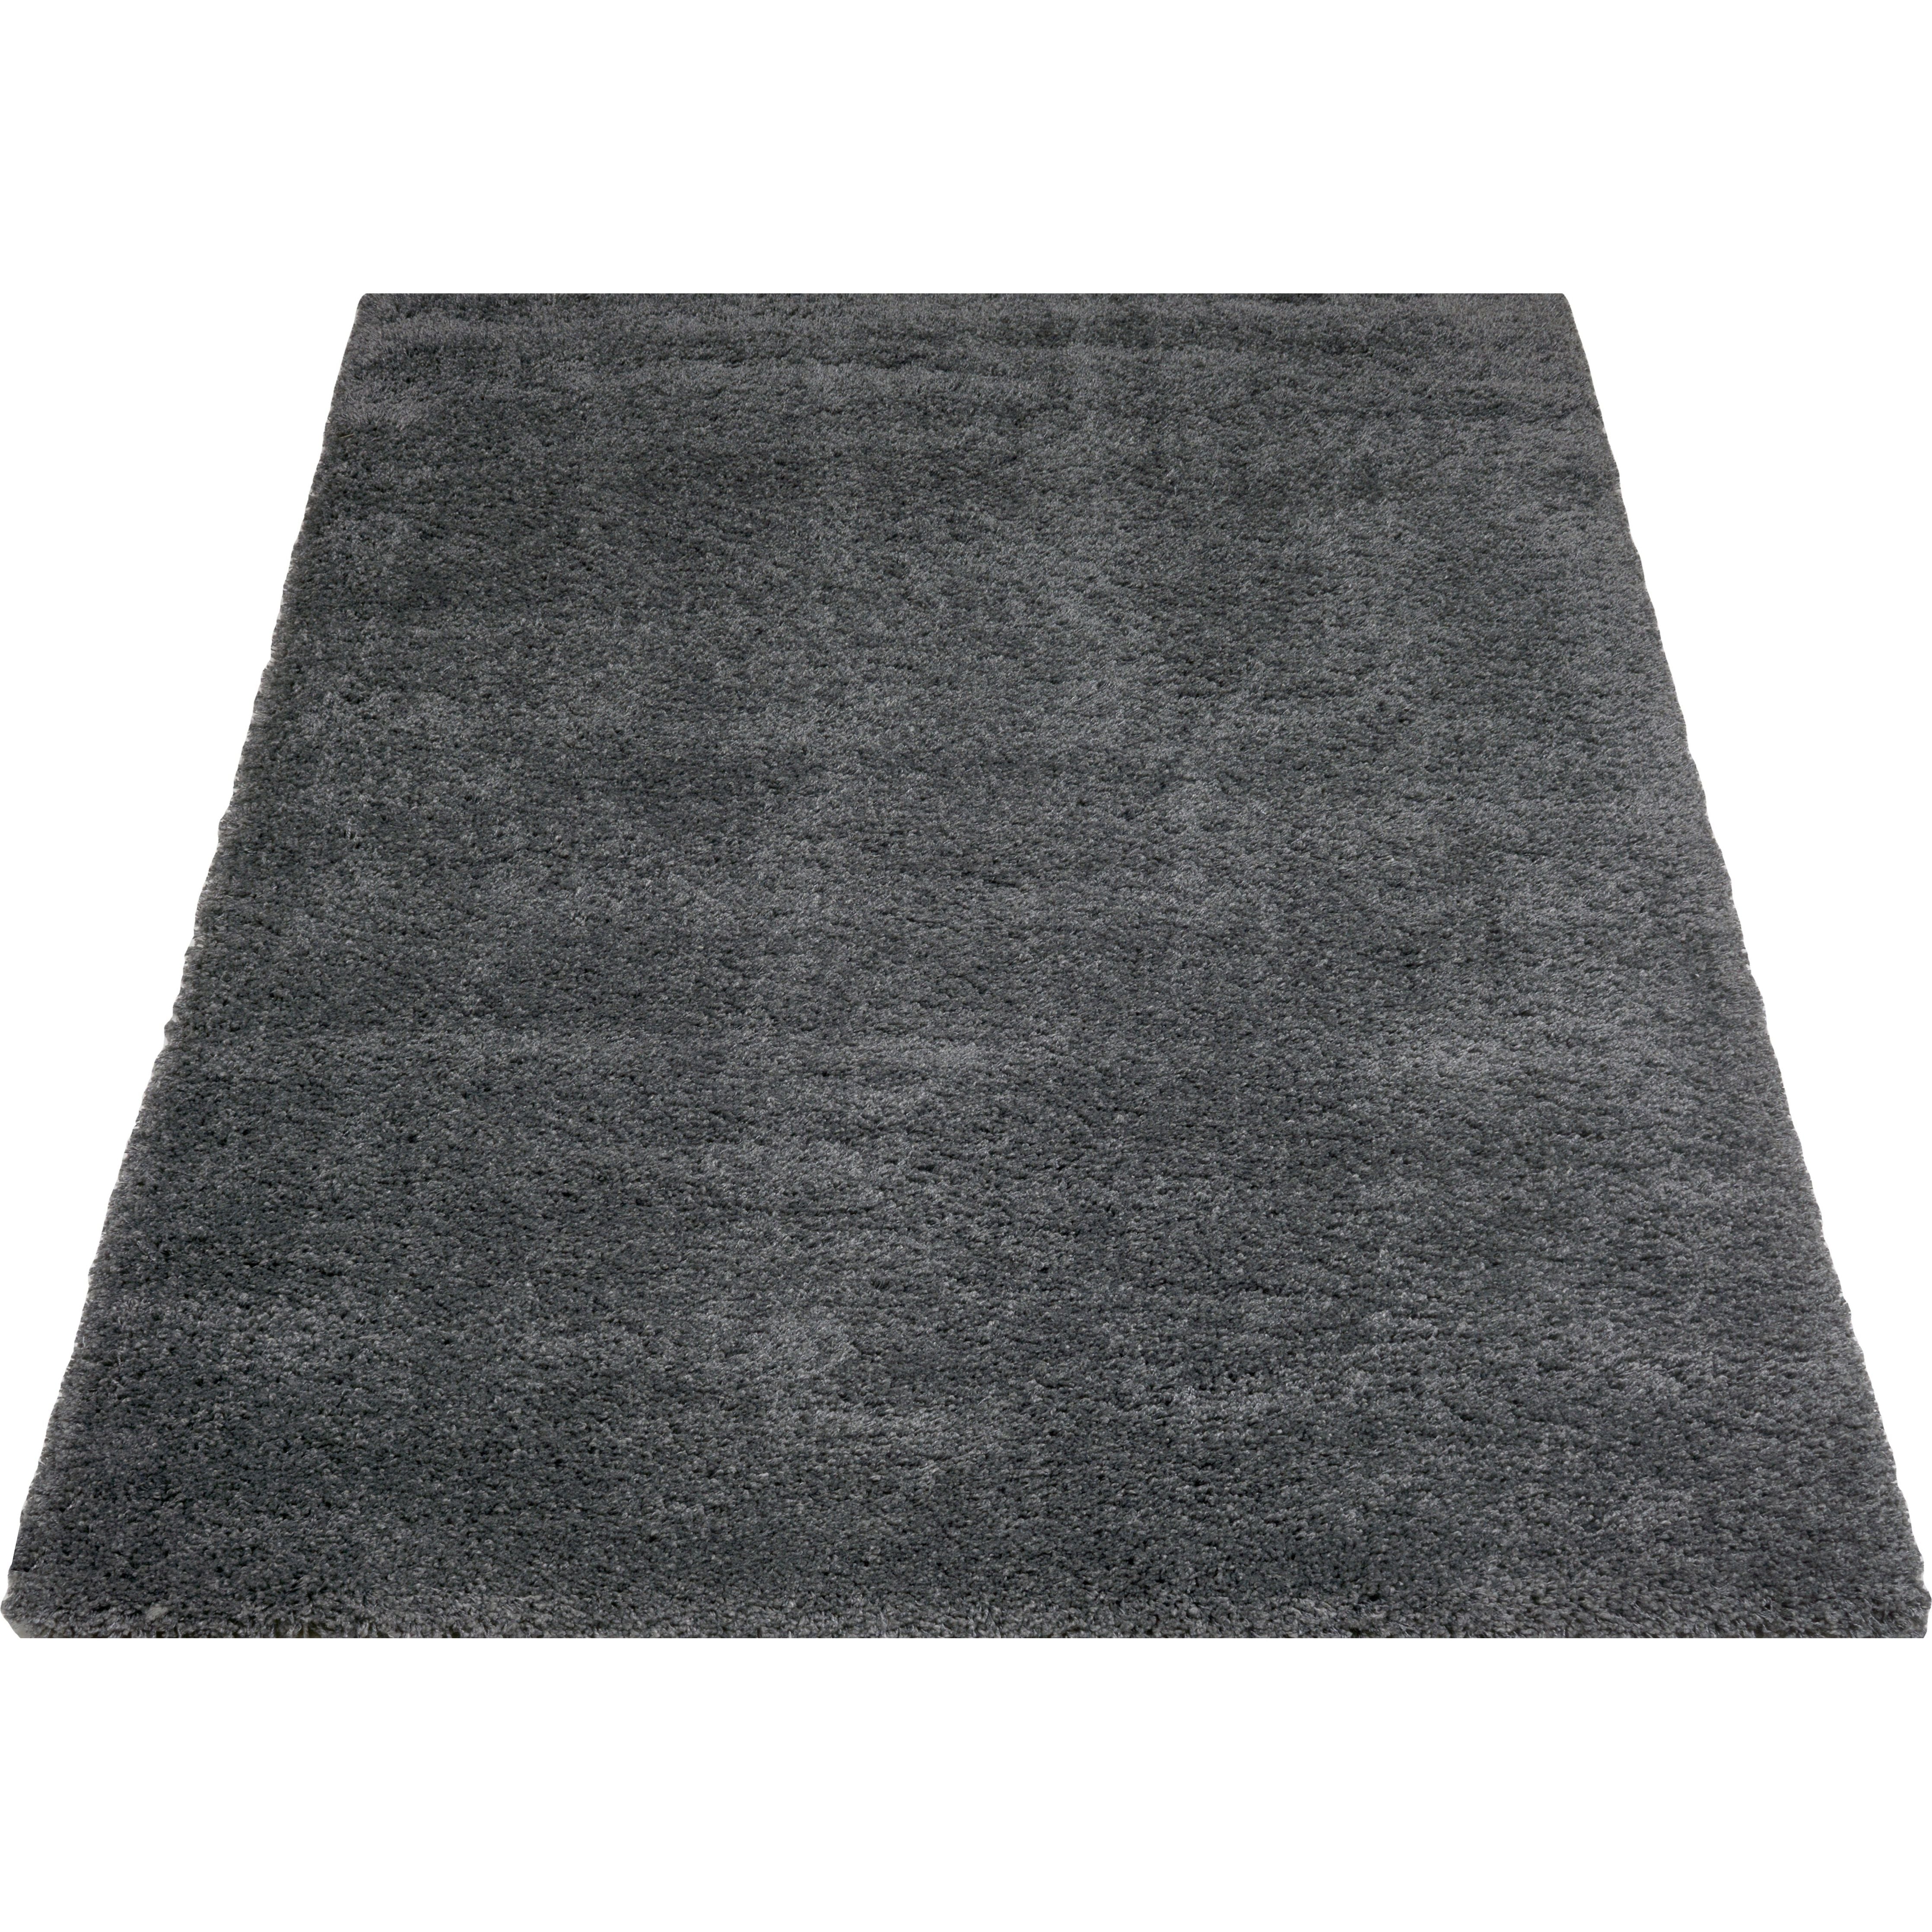 Karpet Rome Grey 70 x 140 cm